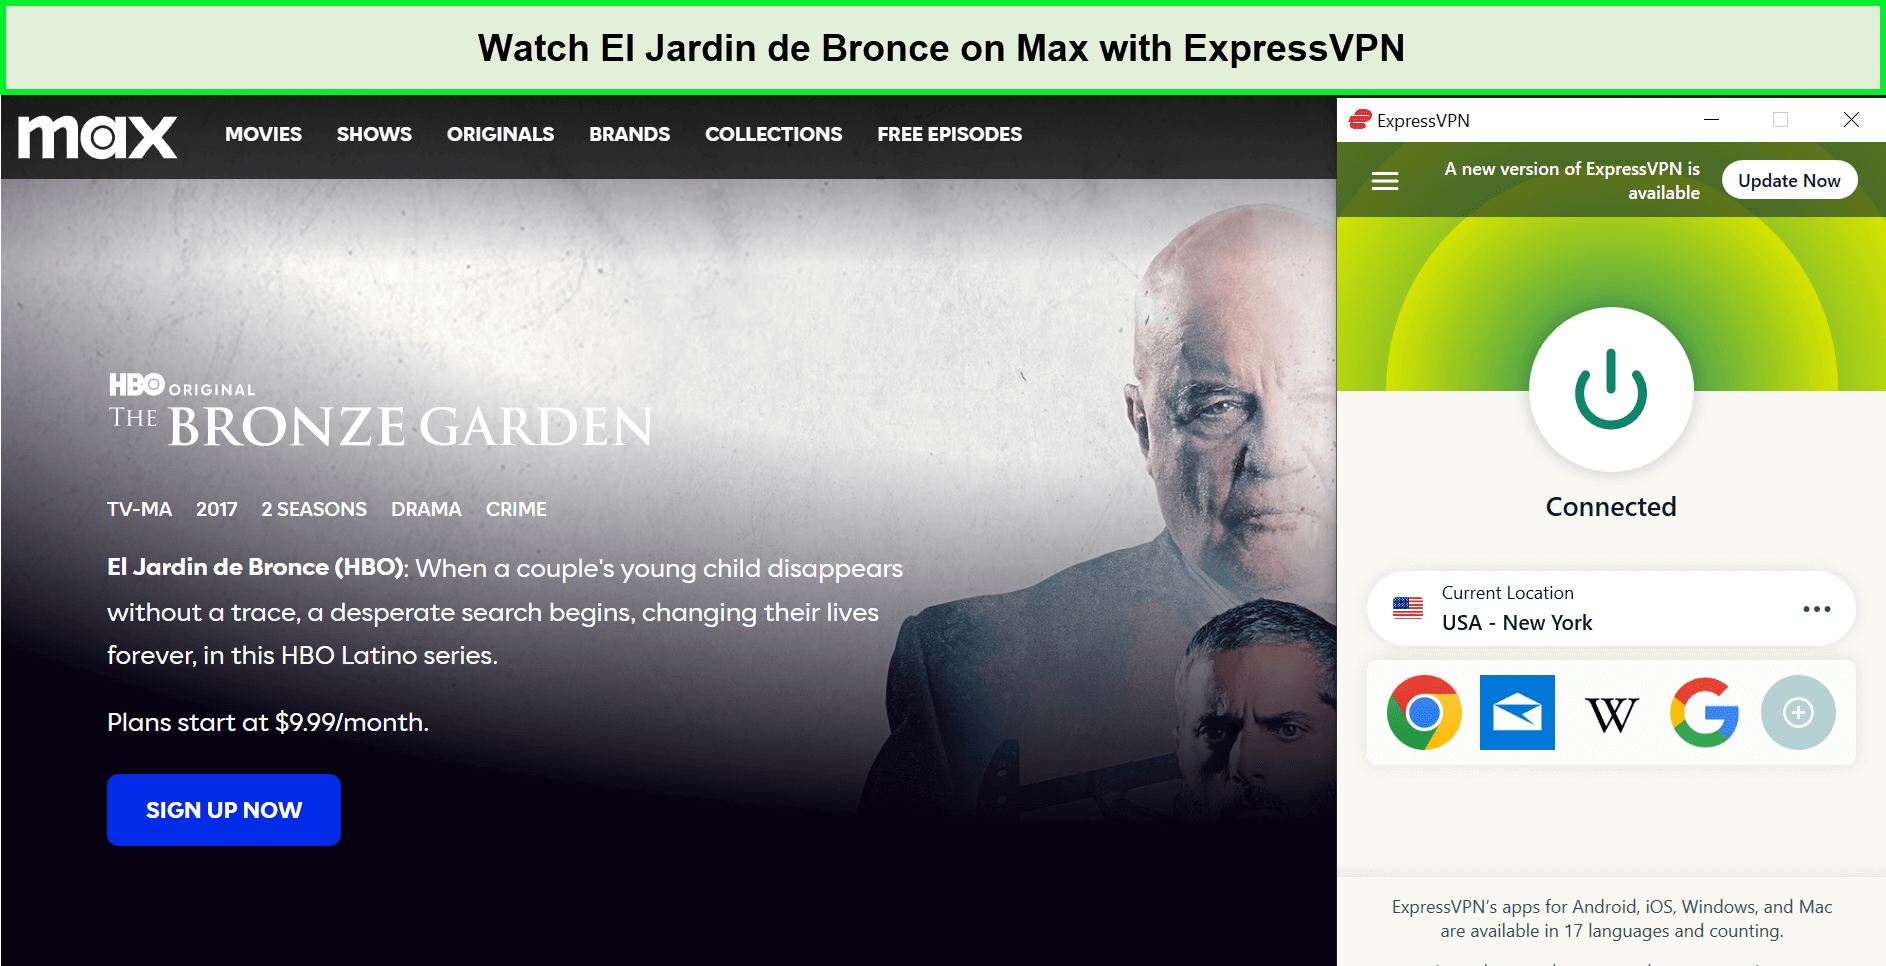 Watch-El-Jardin-de-Bronce-outside-USA-on-Max-with-ExpressVPN